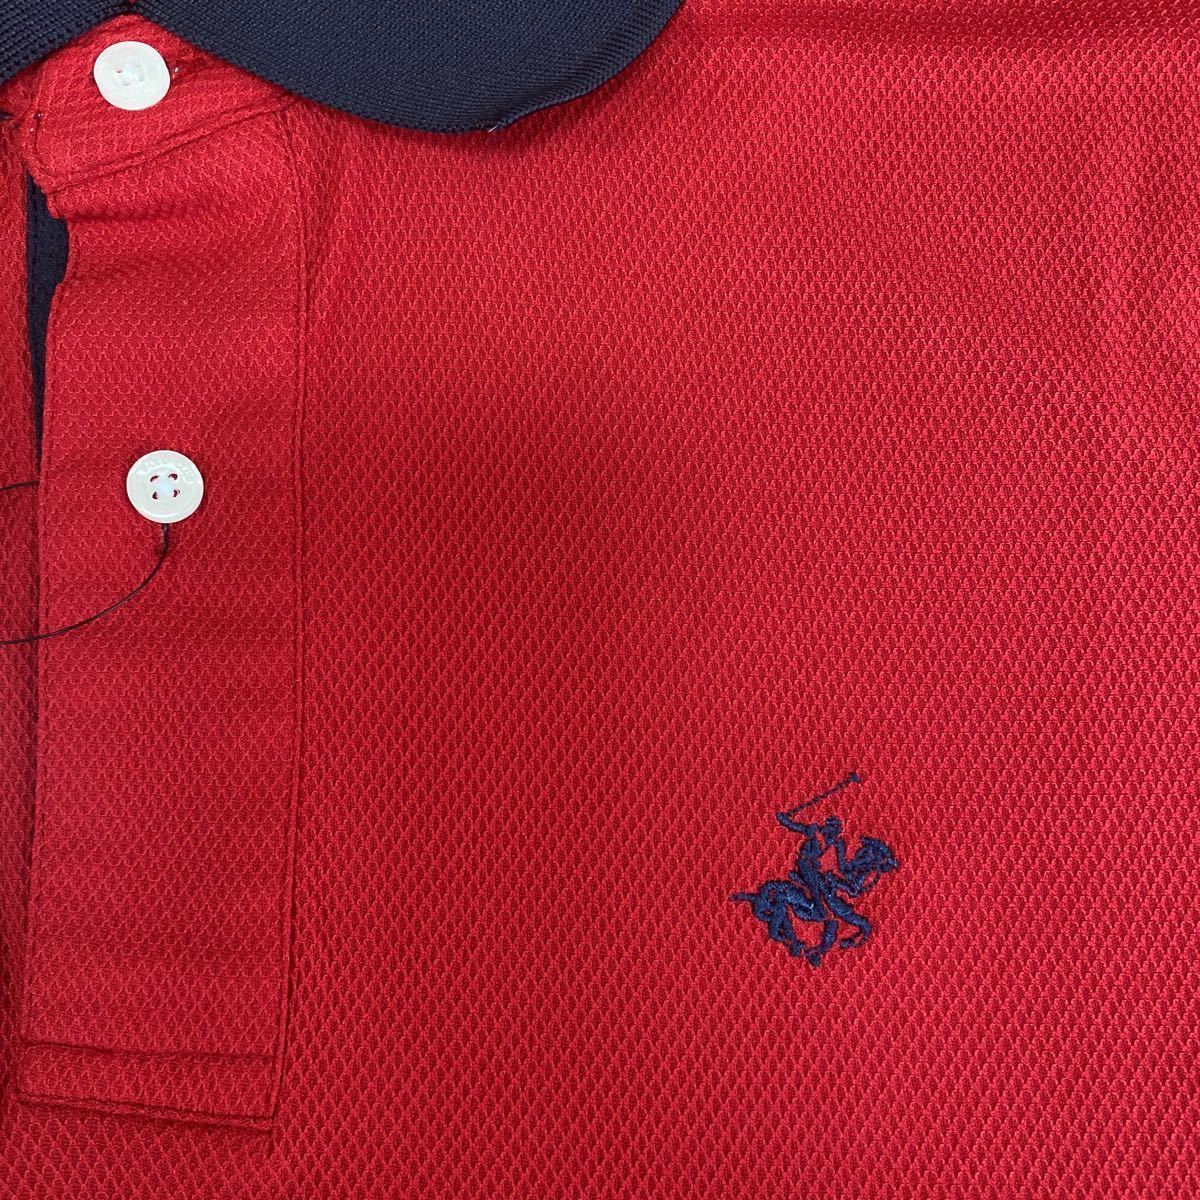 L ビバリーヒルズポロクラブ 新品 半袖ポロシャツ 襟付きトップス 吸汗速乾 ドライ 赤 メンズ 紳士 アウトドア ゴルフウェア スポーツgolf